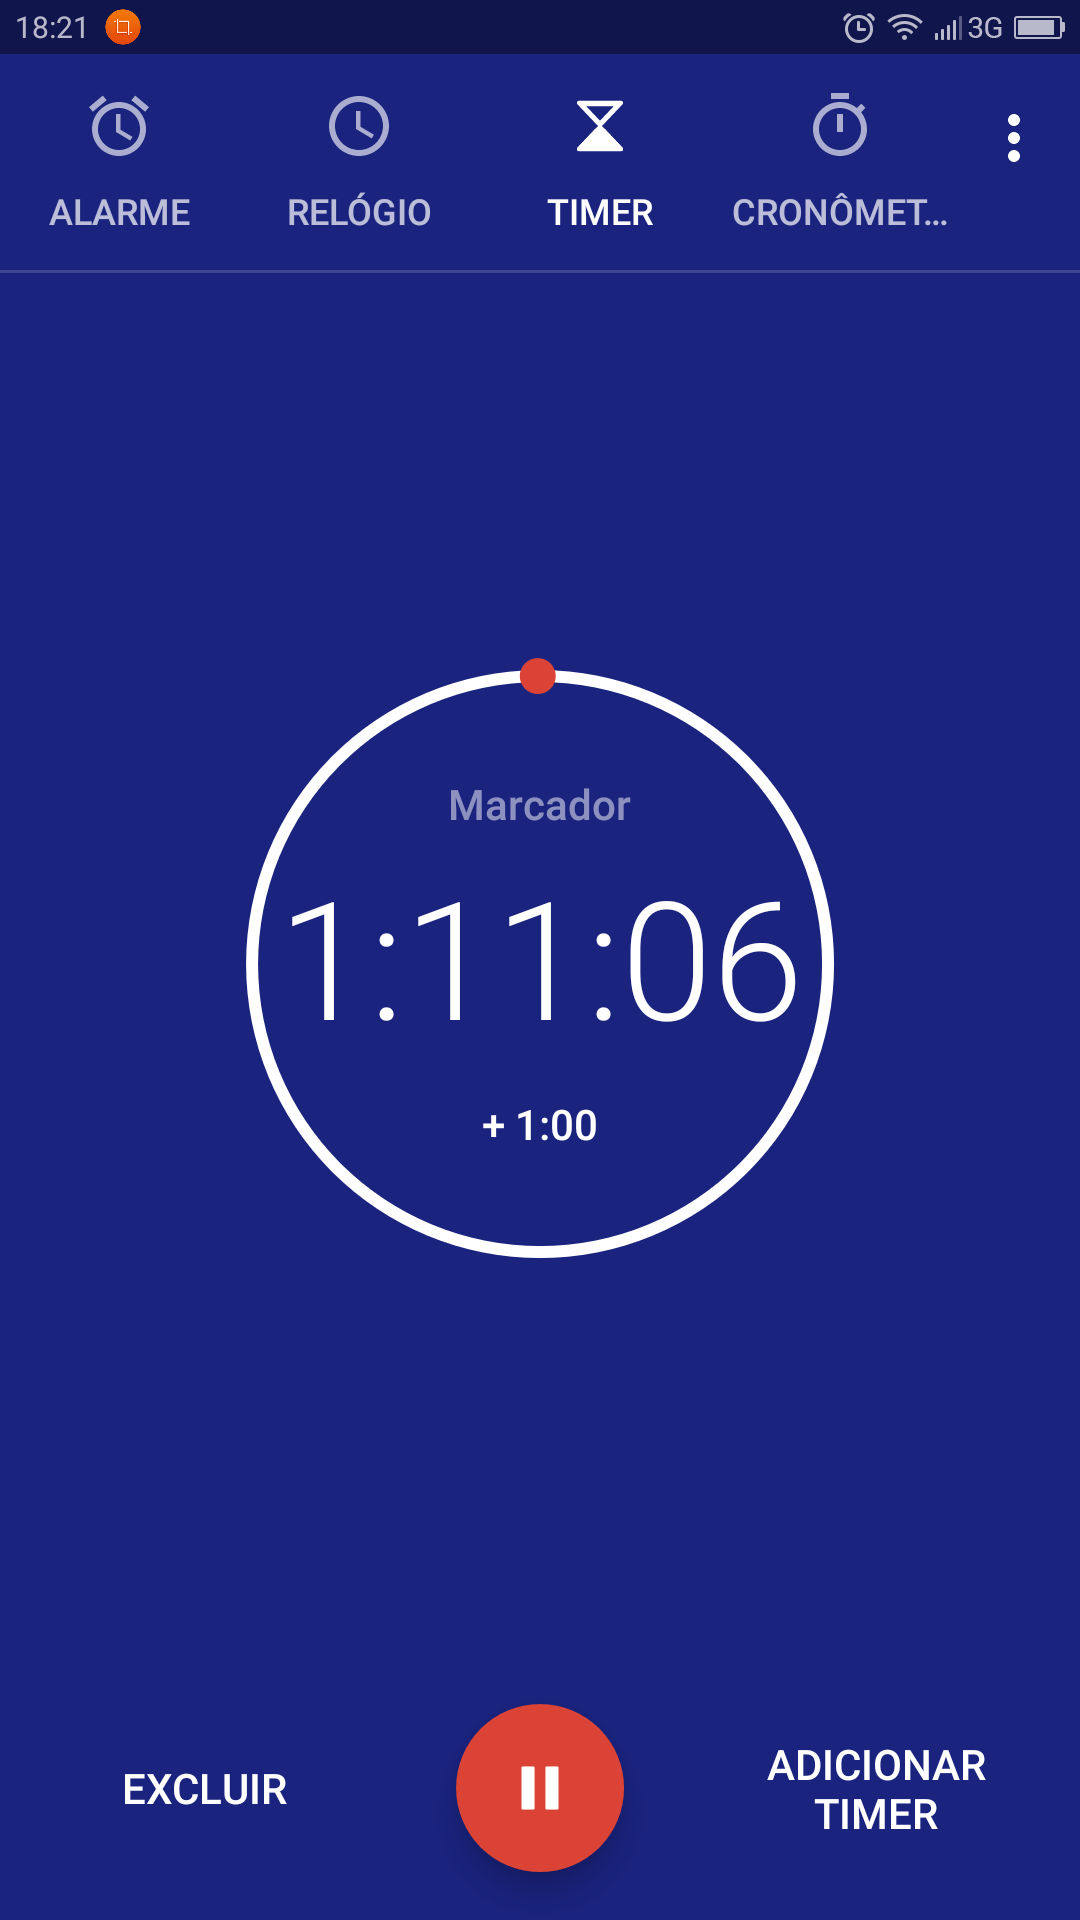 Relógio Google versão 5.0